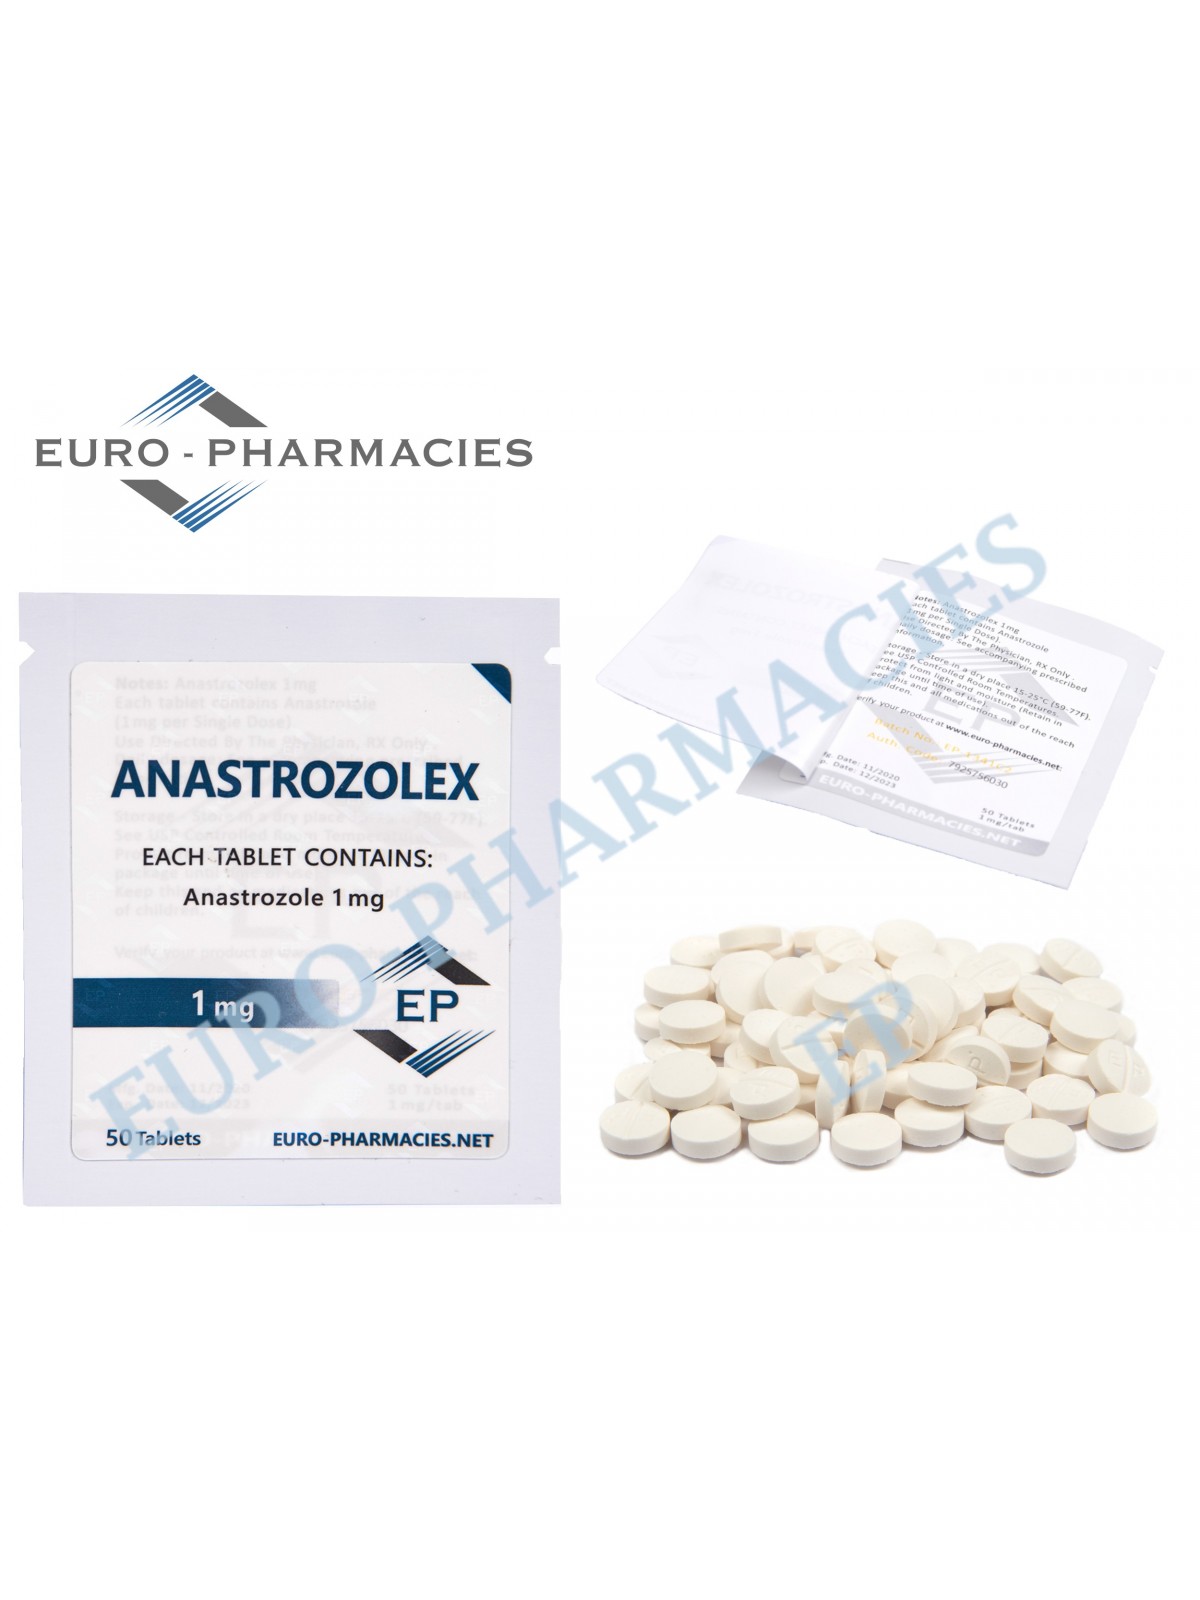 ARIMIDEX- 1mg/tab 50 Tabs/bag Euro-Pharmacies - USA